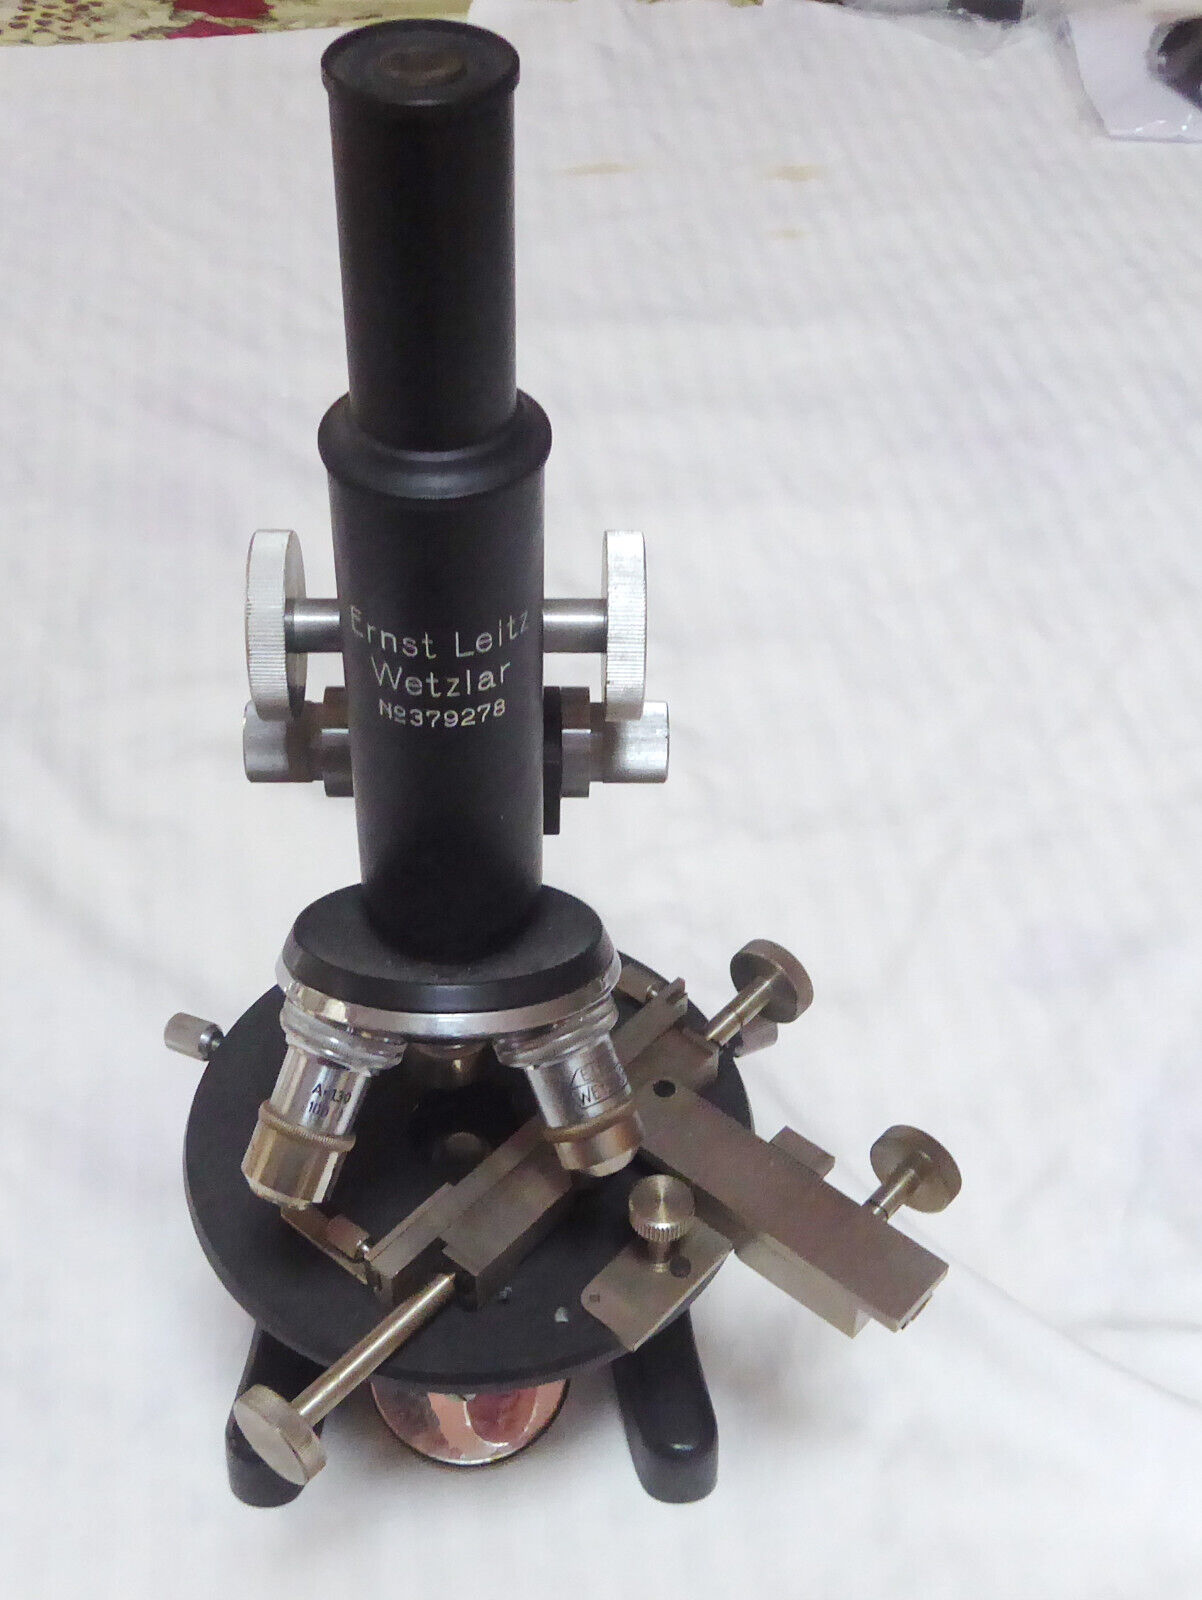 Ernst Leitz Leica Monocular Microscope Number 379278 1941